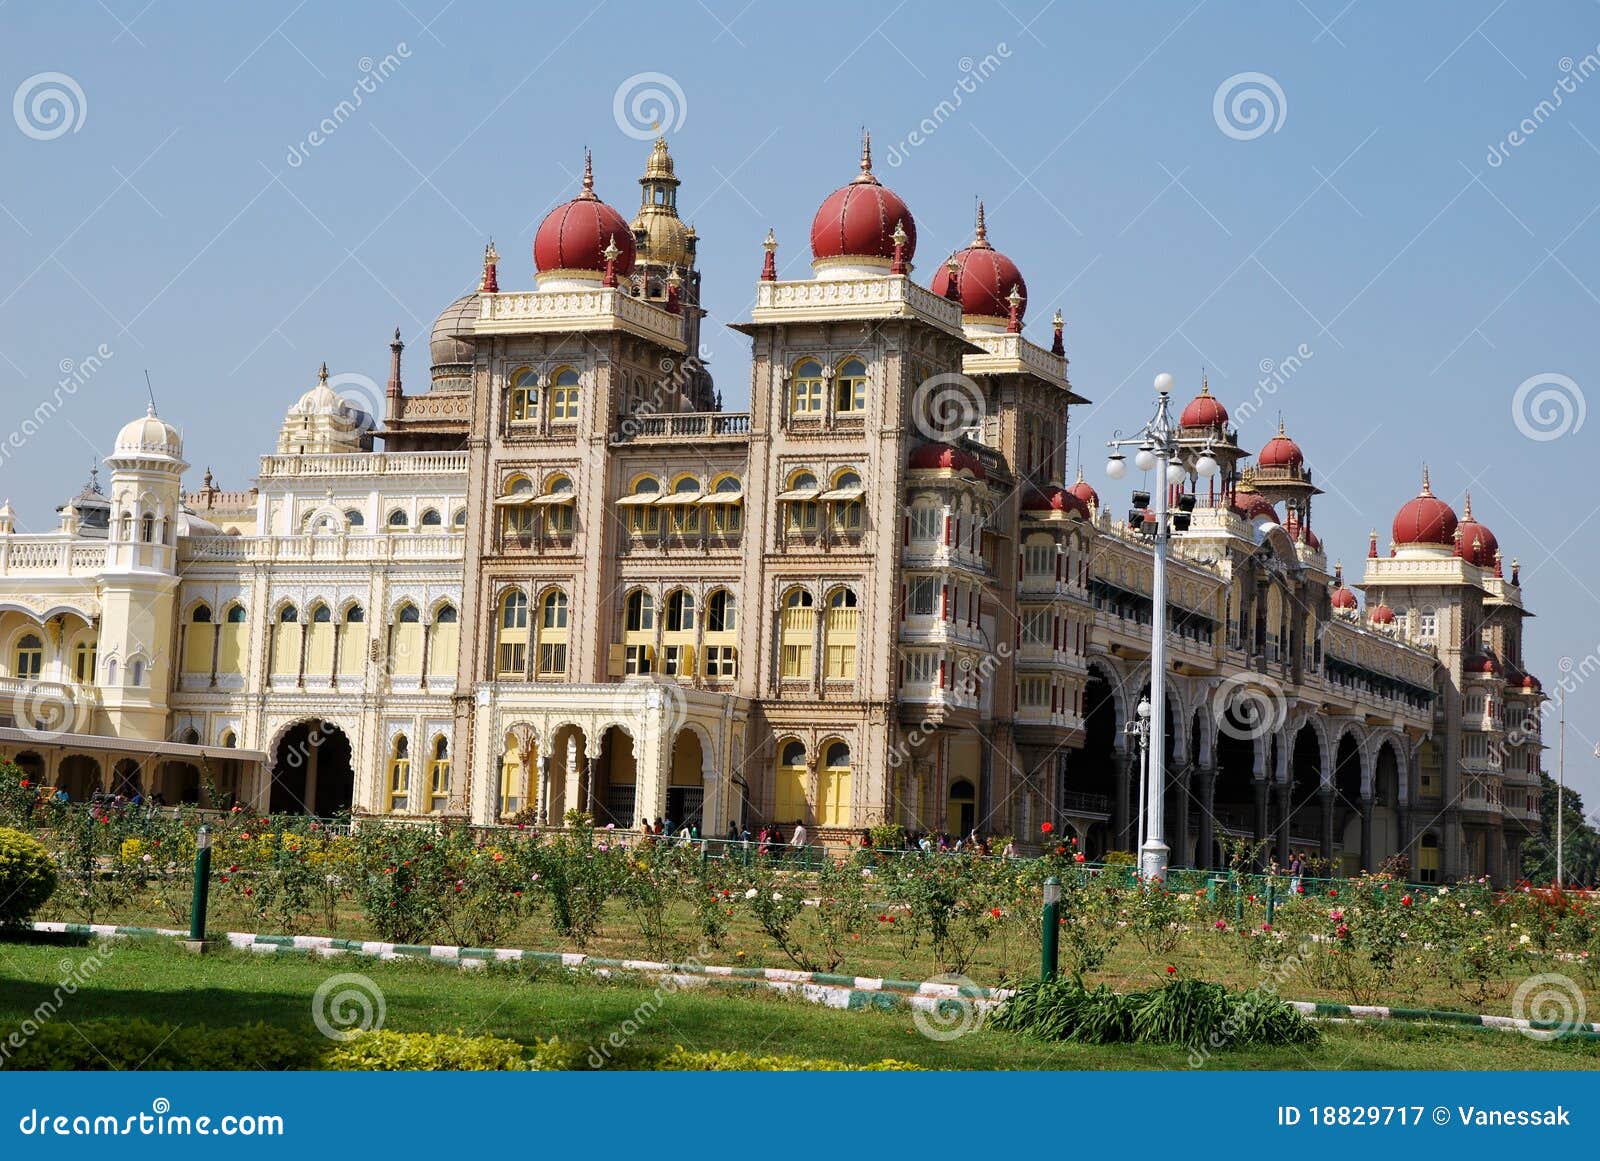 mysore palace in india